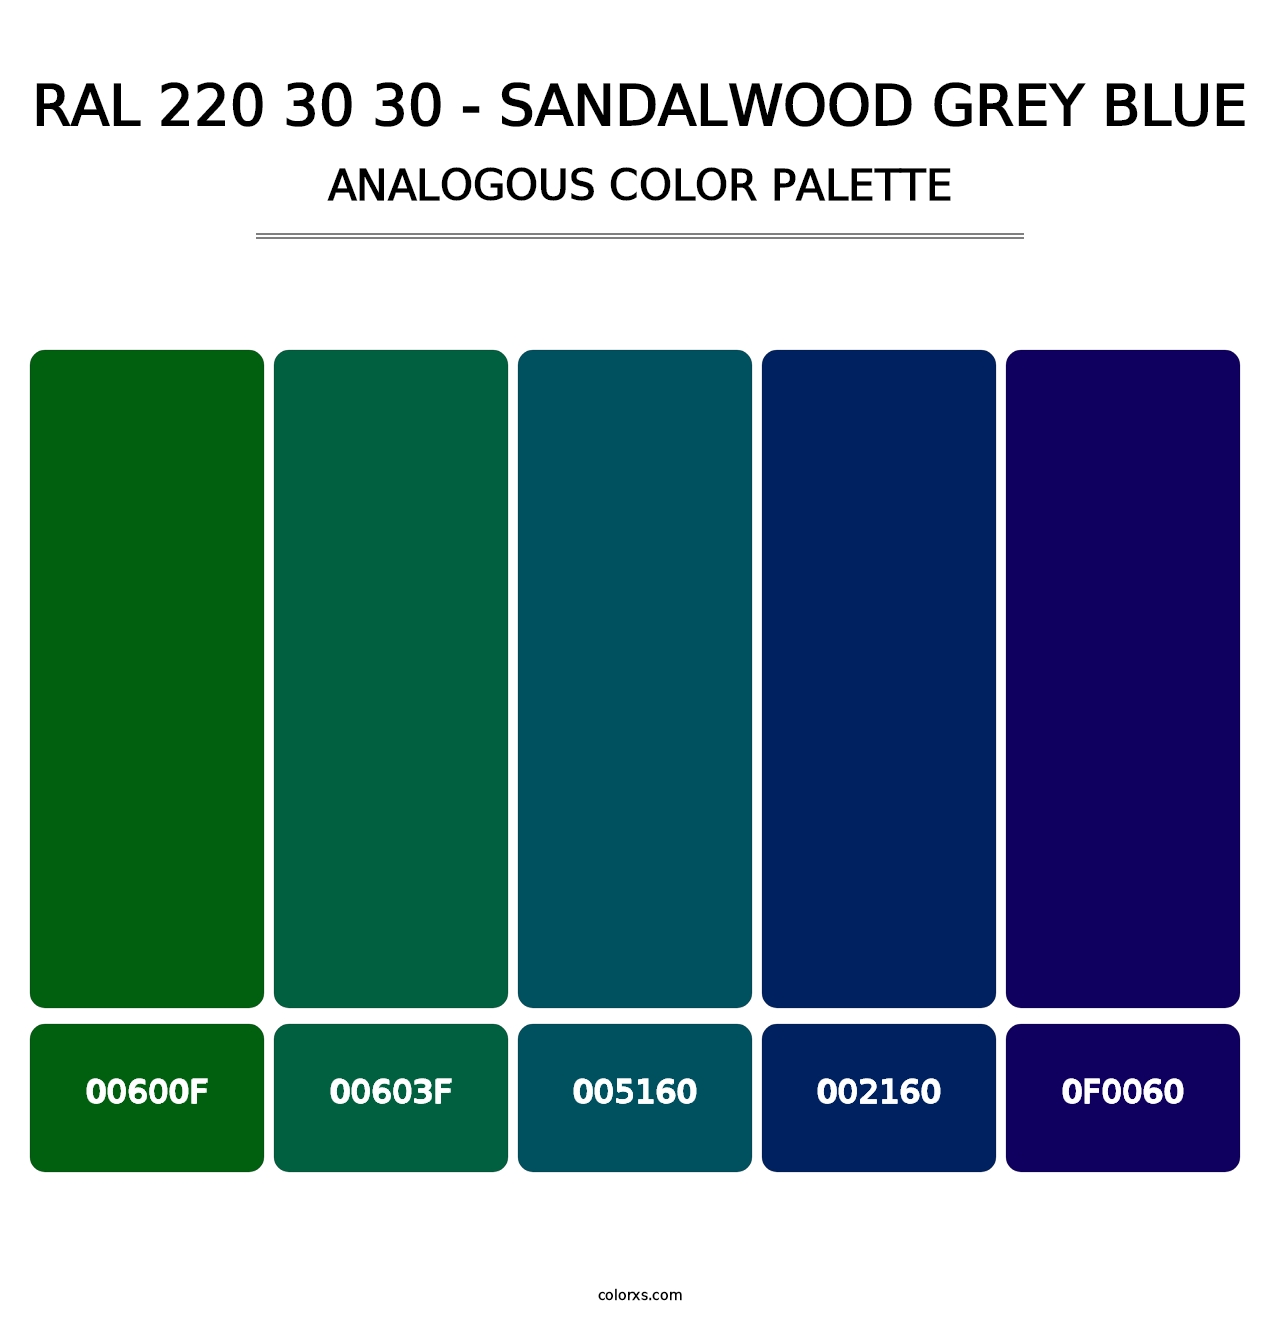 RAL 220 30 30 - Sandalwood Grey Blue - Analogous Color Palette